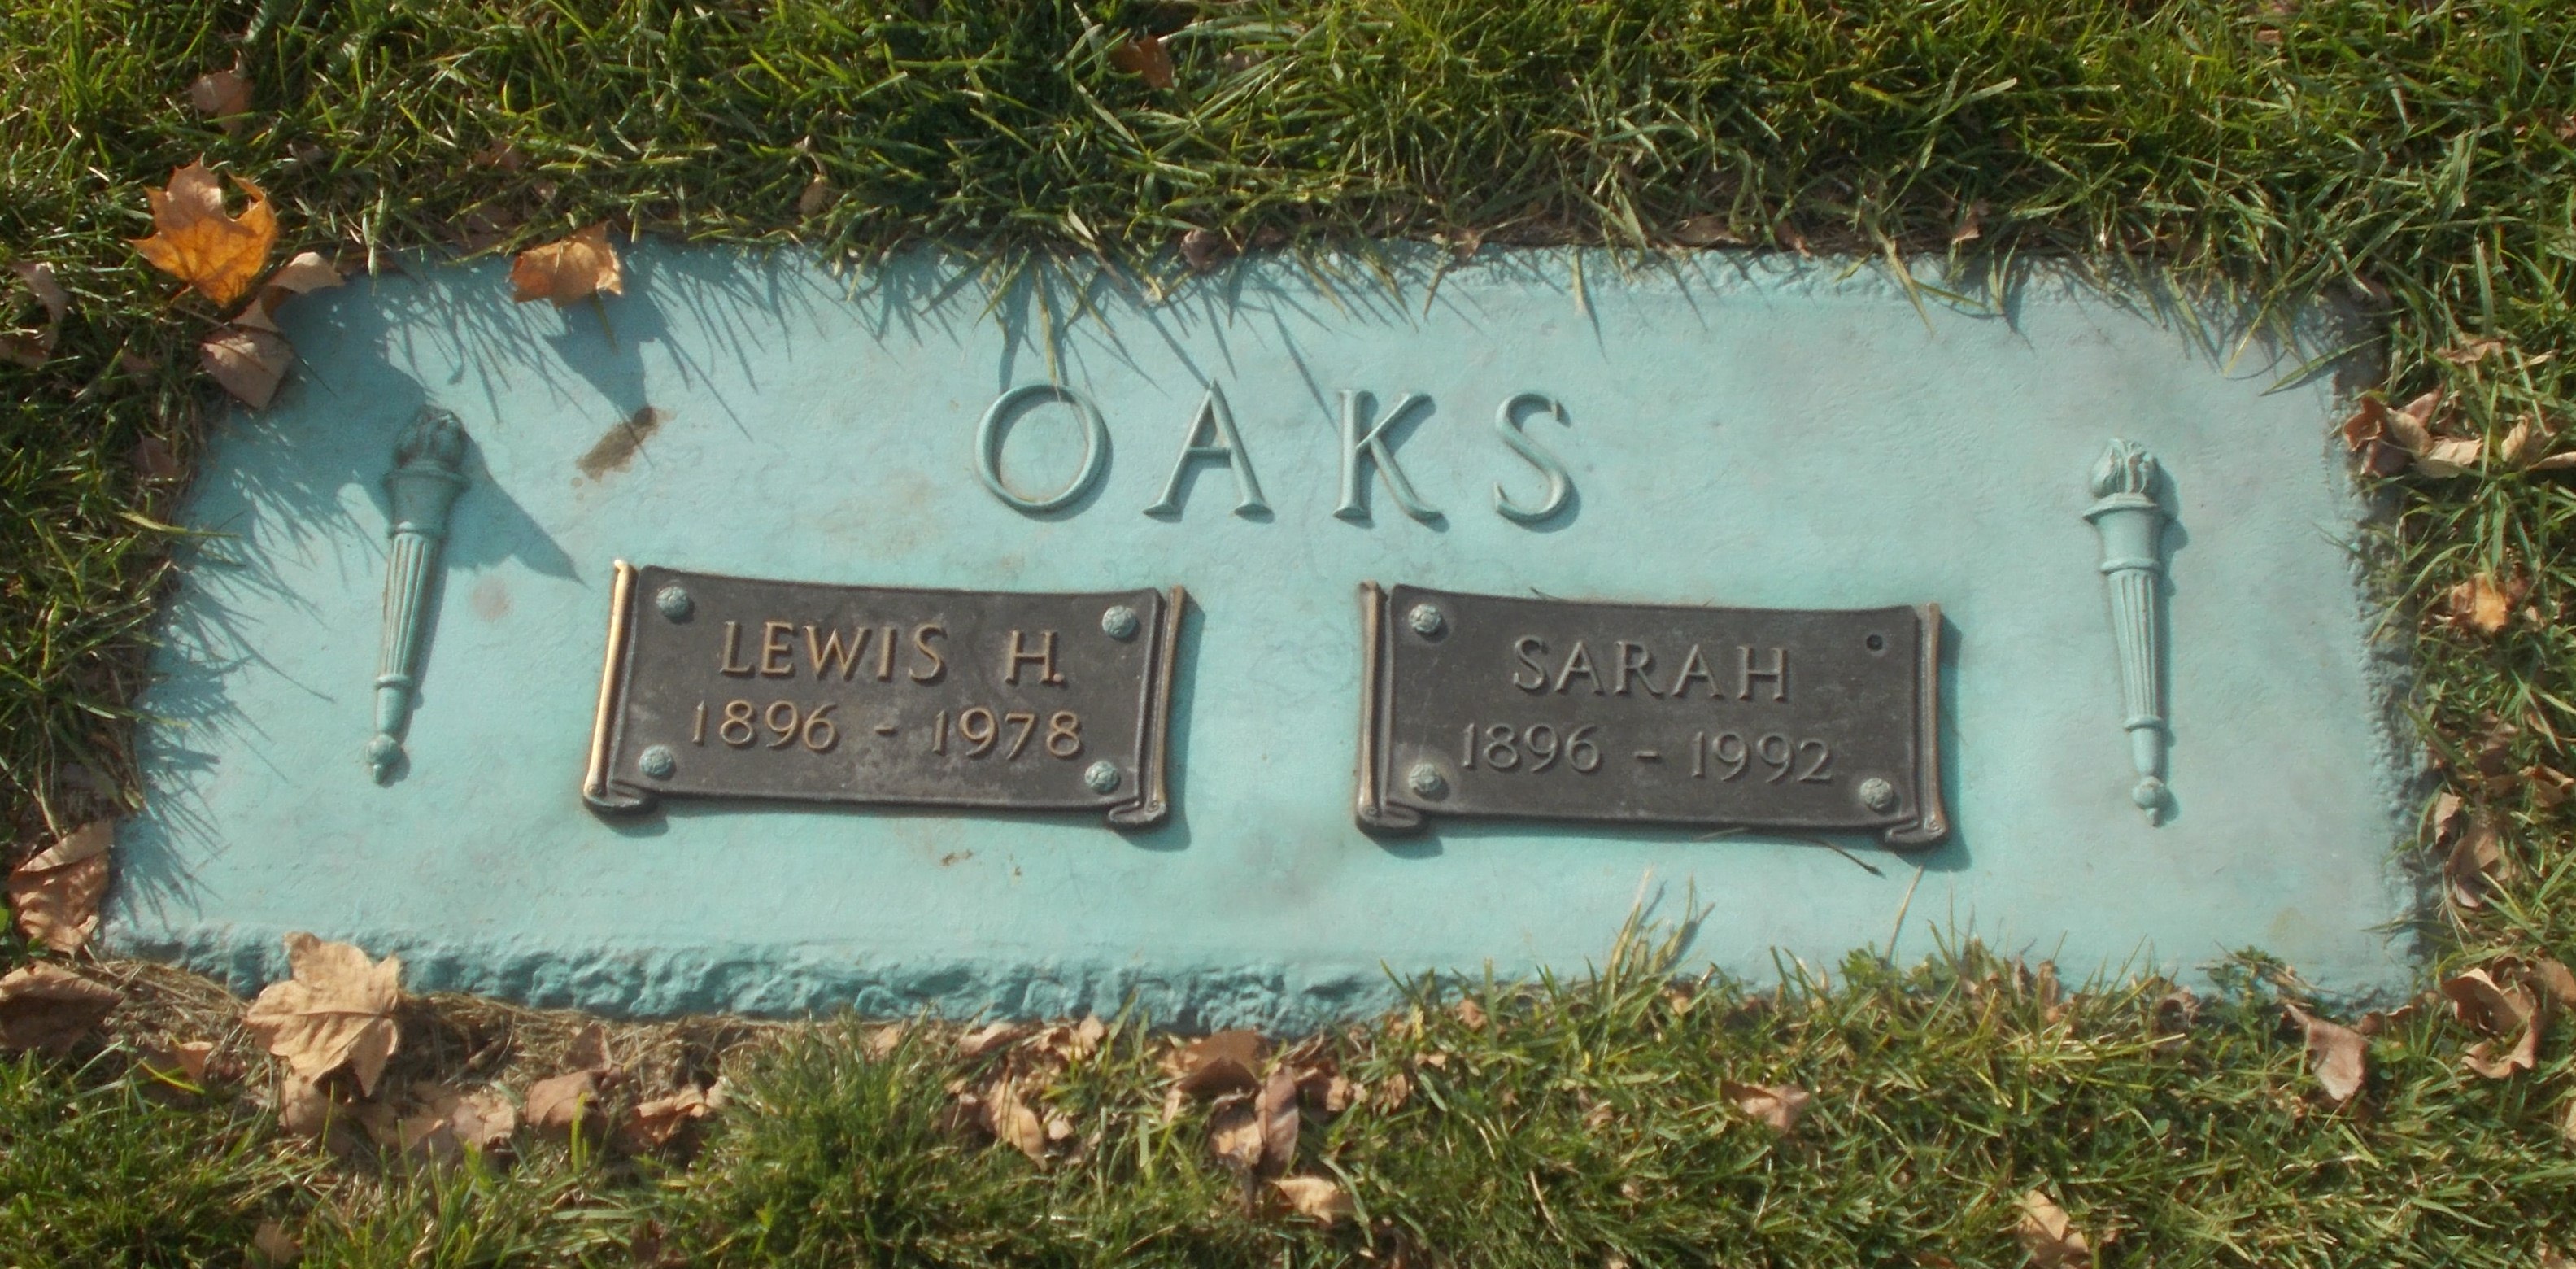 Lewis H Oaks